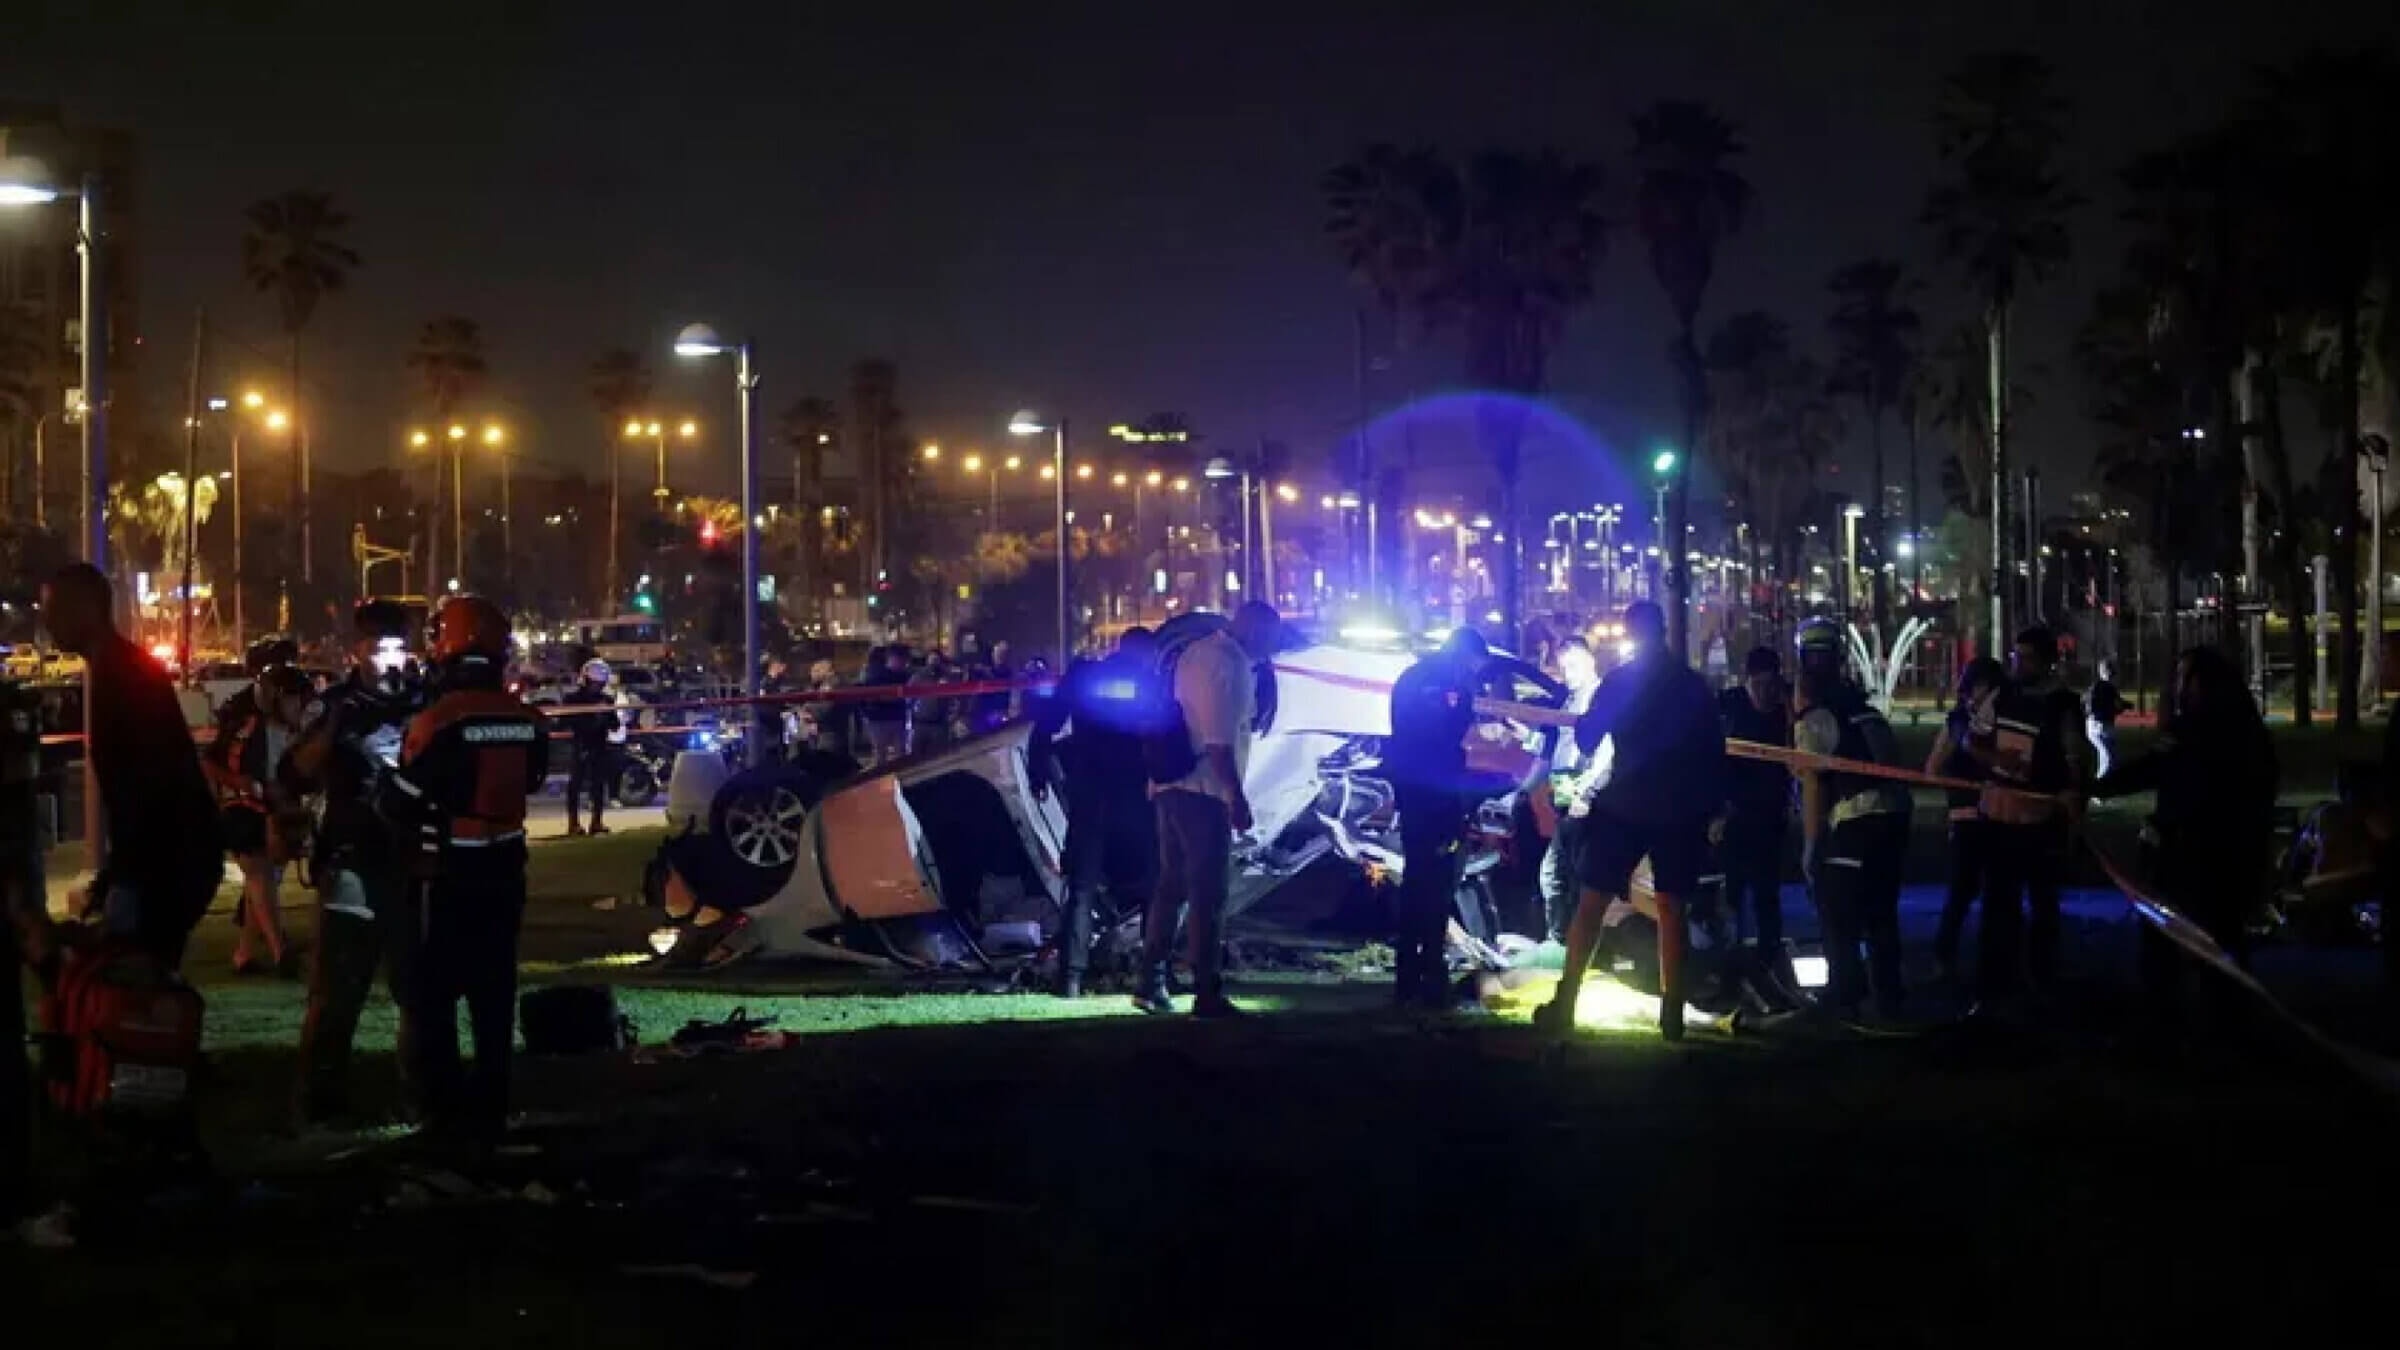 The scene of the attack at Tel Aviv's beach promenade on Friday.